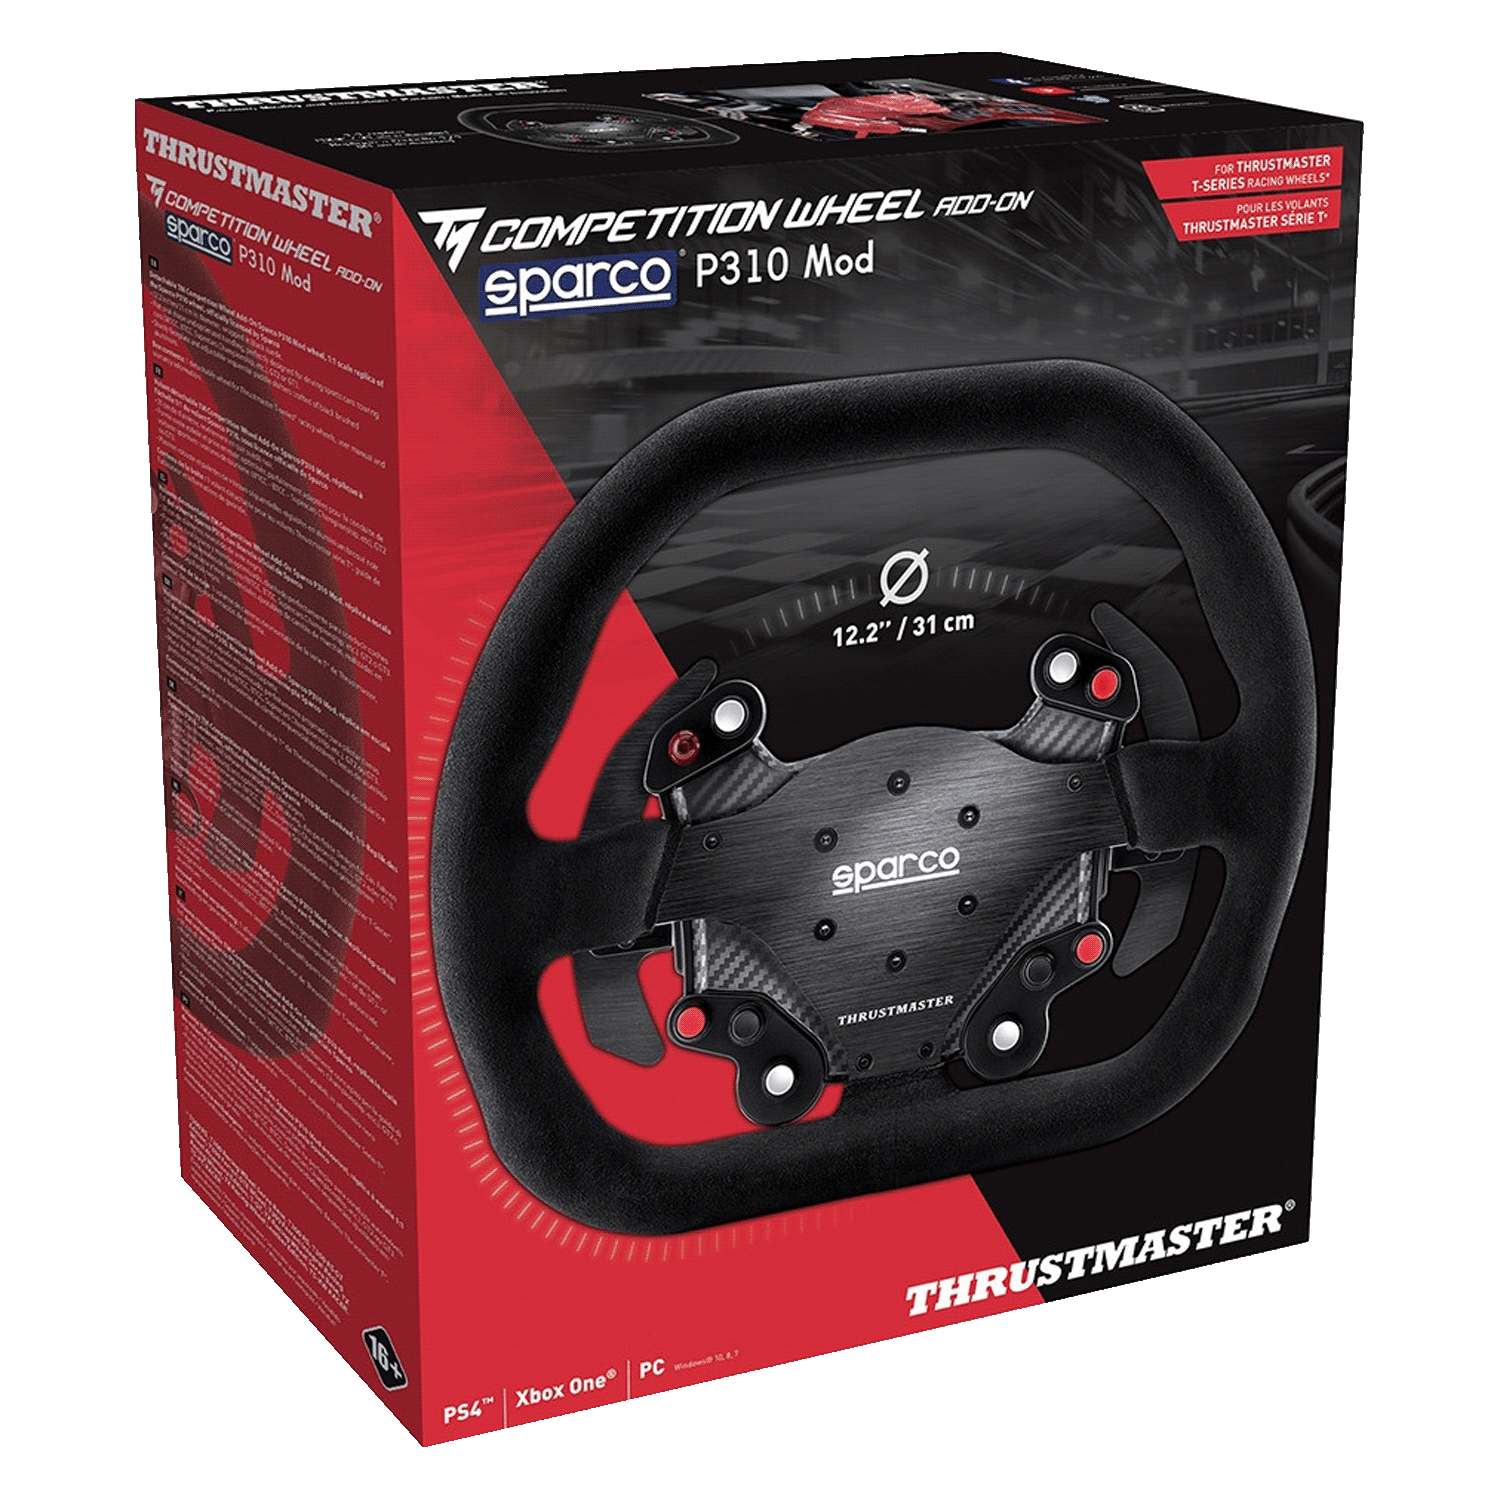 Volante Thrustmaster TM Competition Wheel Add-On Sparco P310 Mod para PC/PS4/XBOX - Preto 
